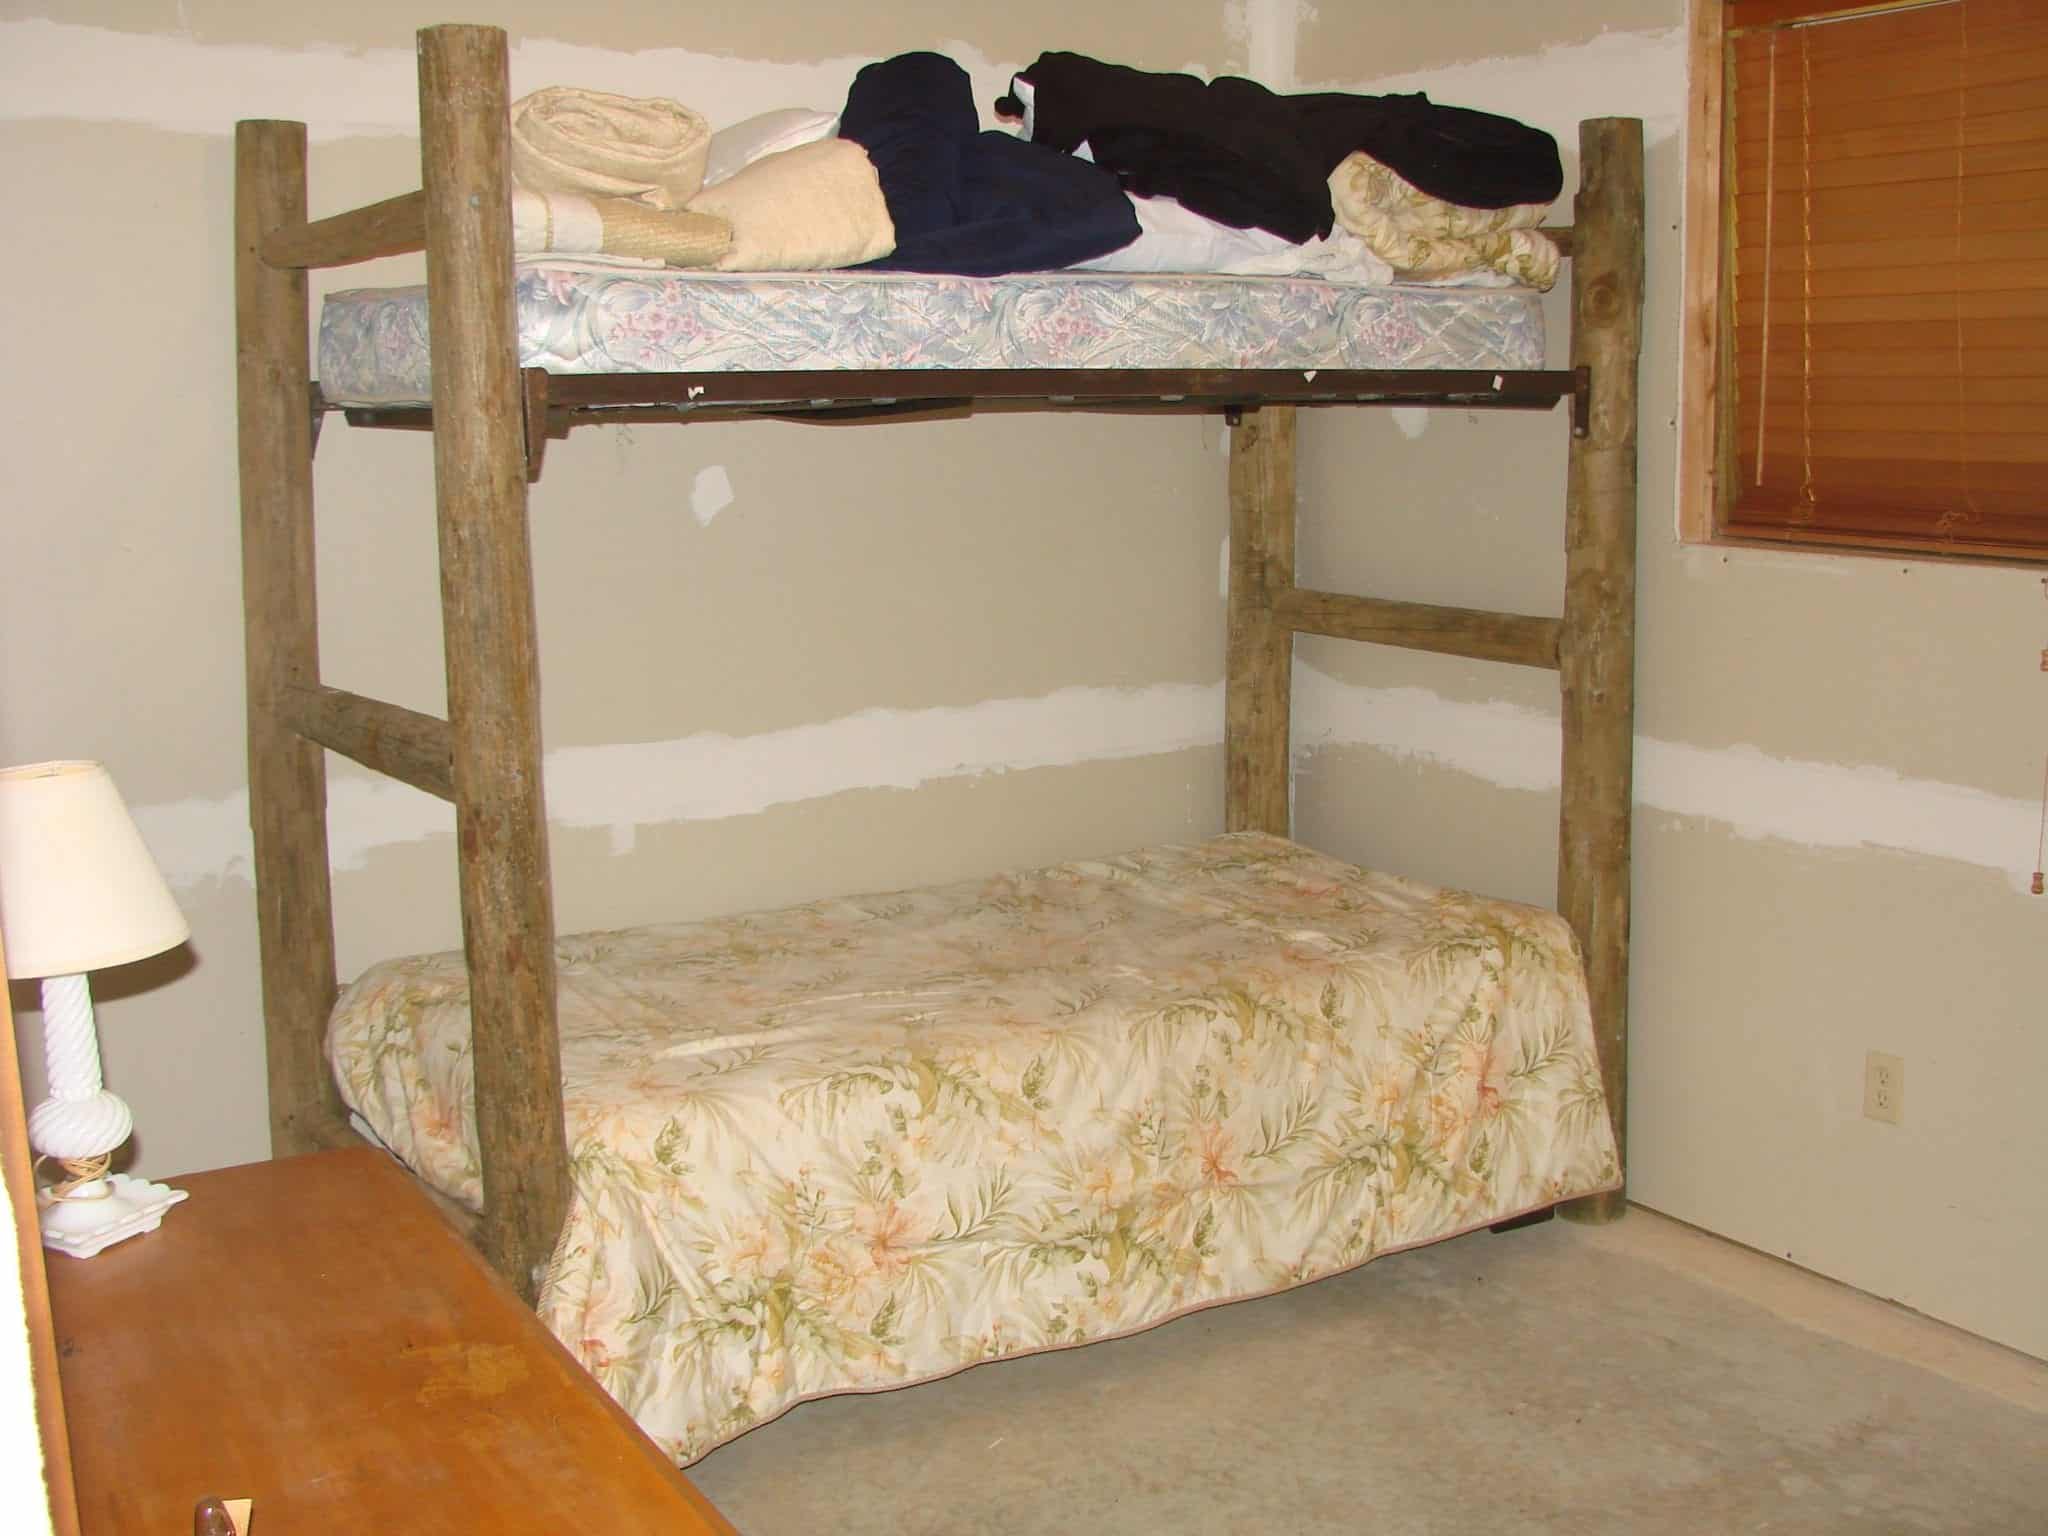 Bunk beds in a cabin rental in Murphy NC.